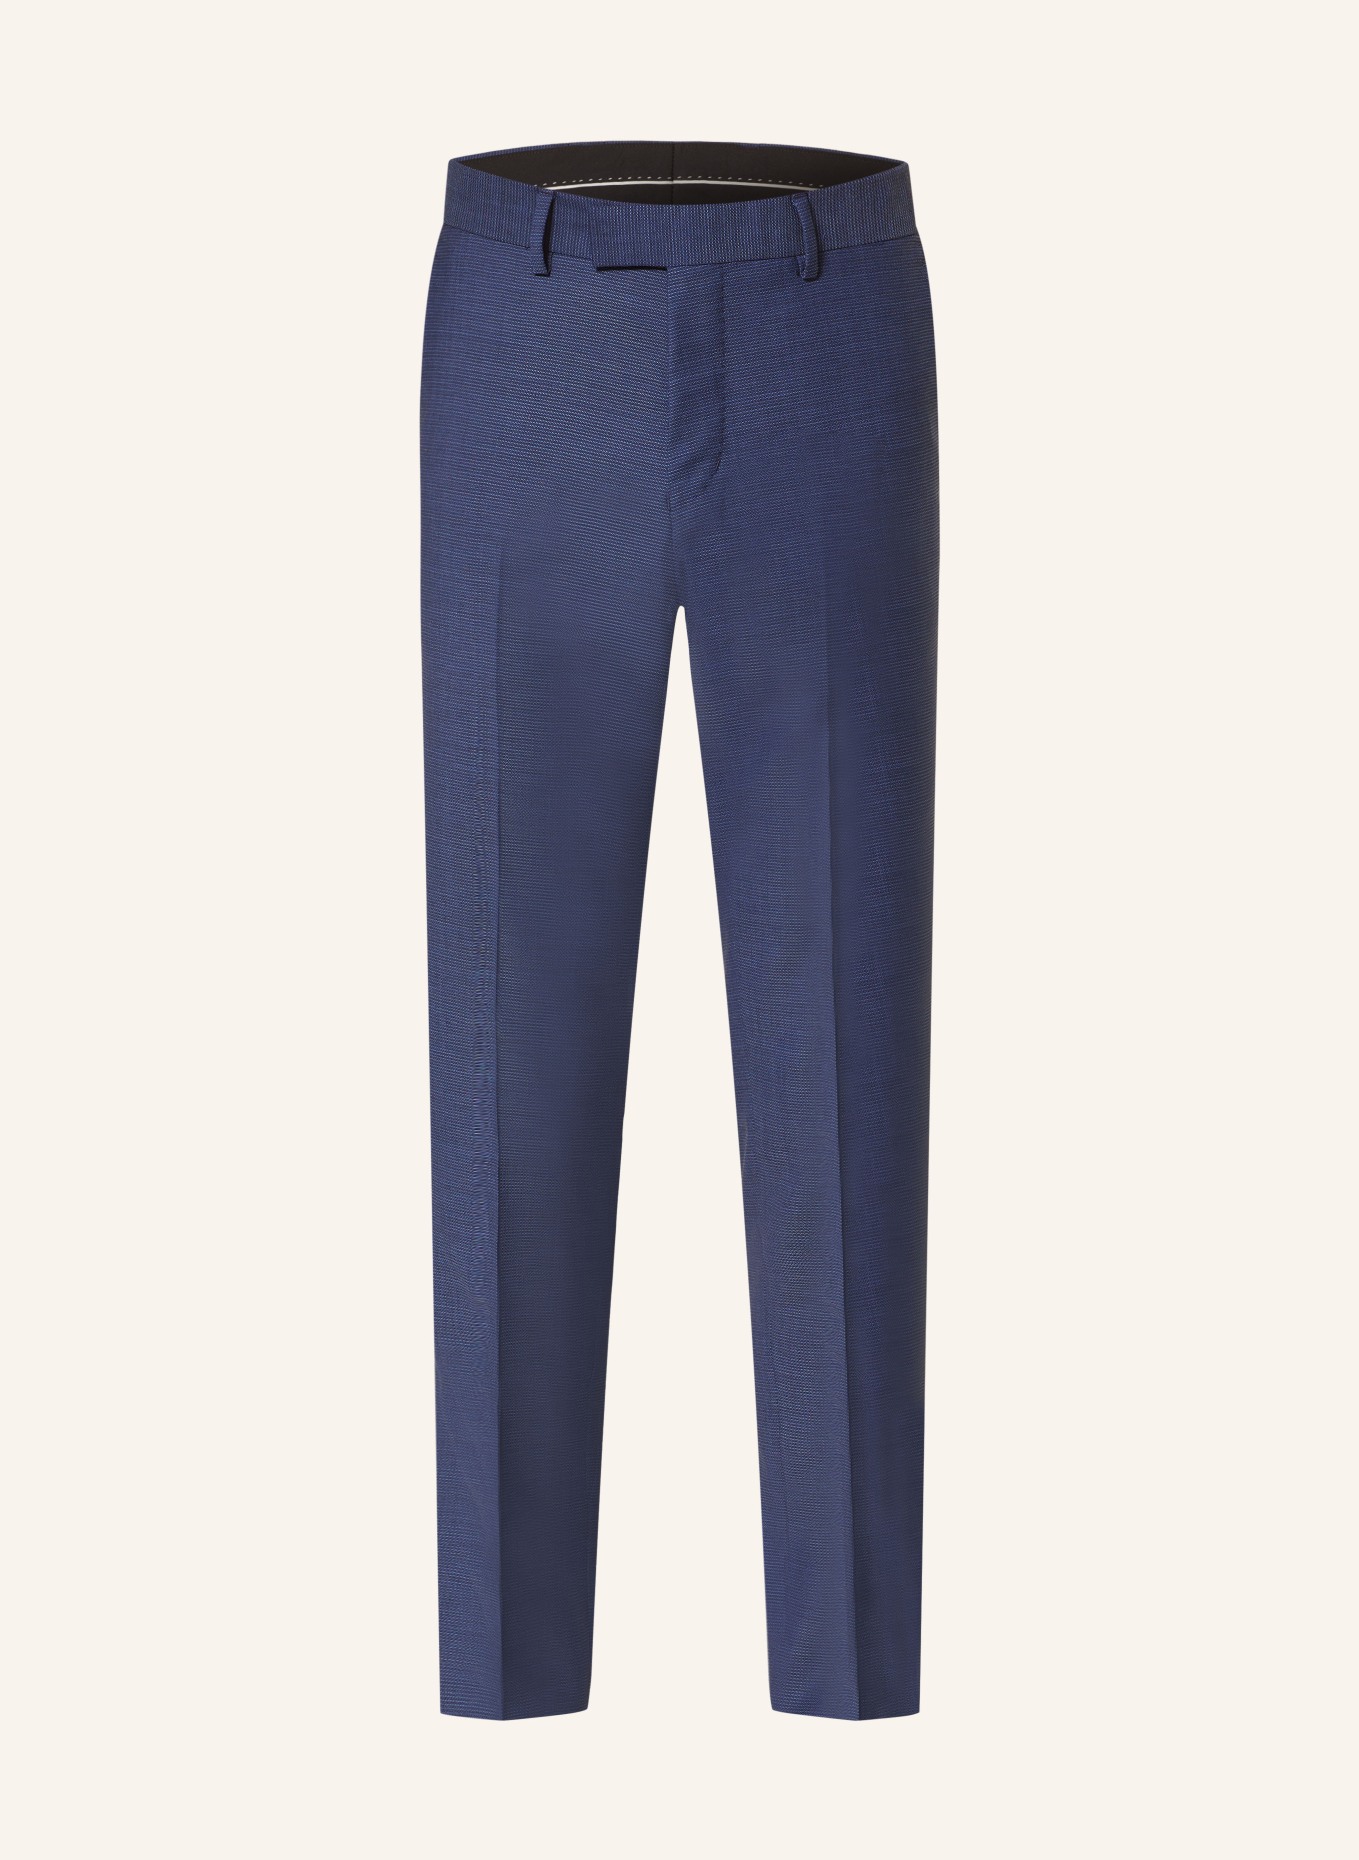 TIGER OF SWEDEN Anzughose TENUTA Slim Fit, Farbe: 22L Smokey Blue (Bild 1)